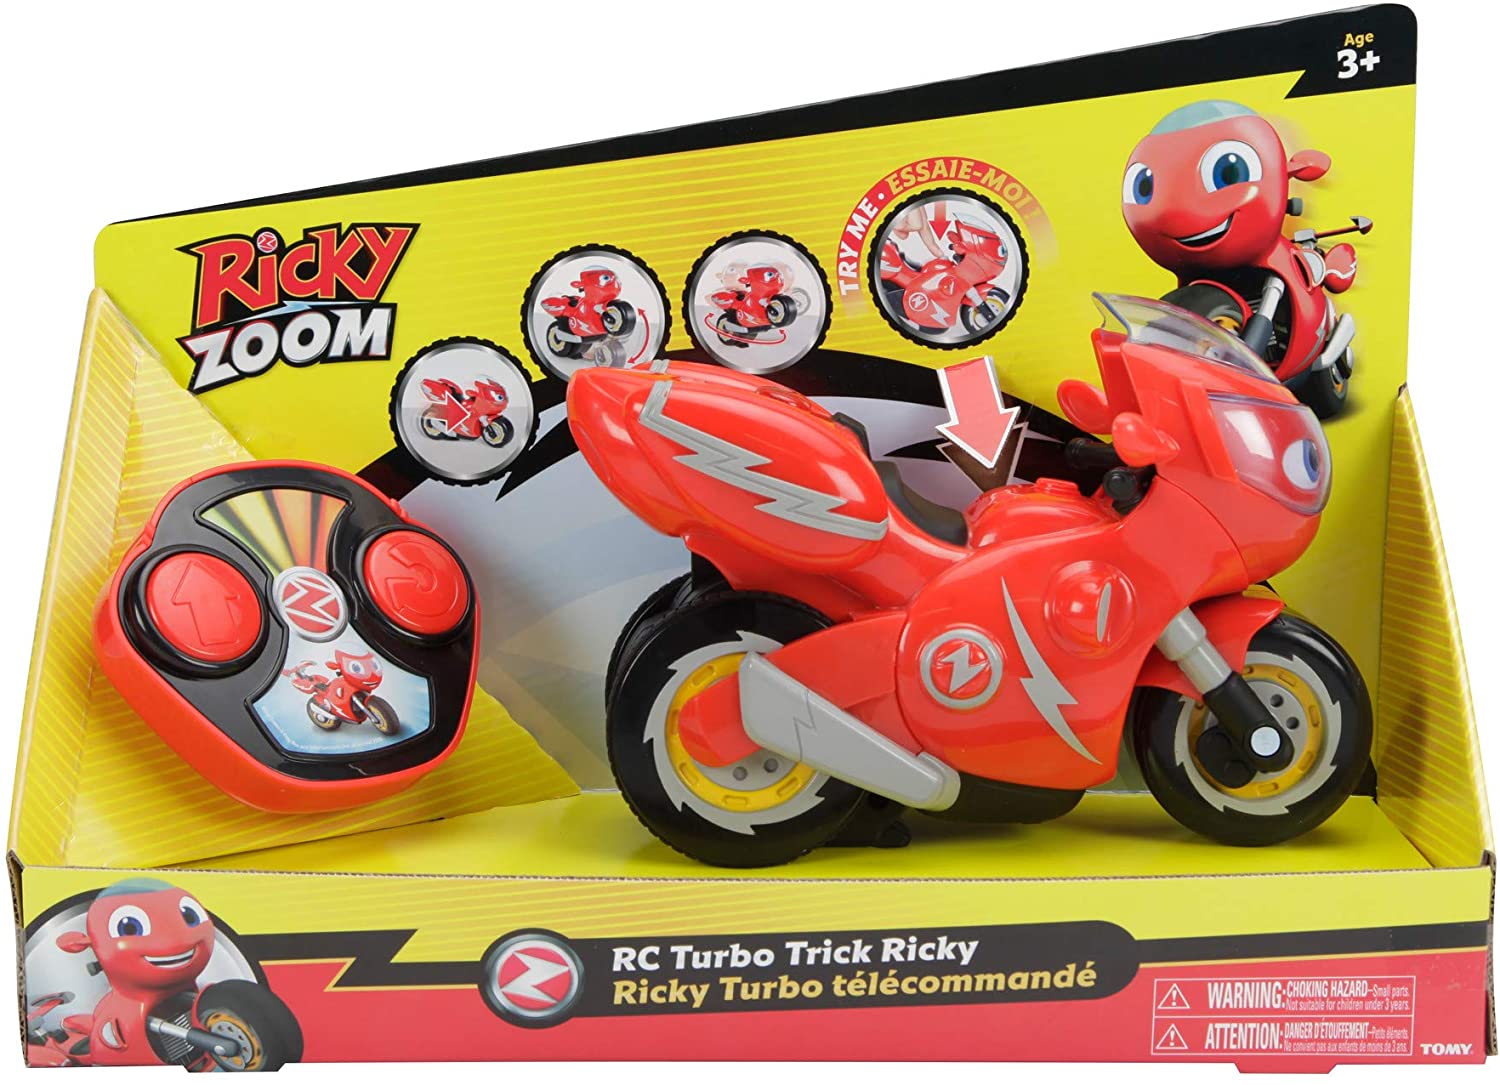 RC Turbo Trick Ricky